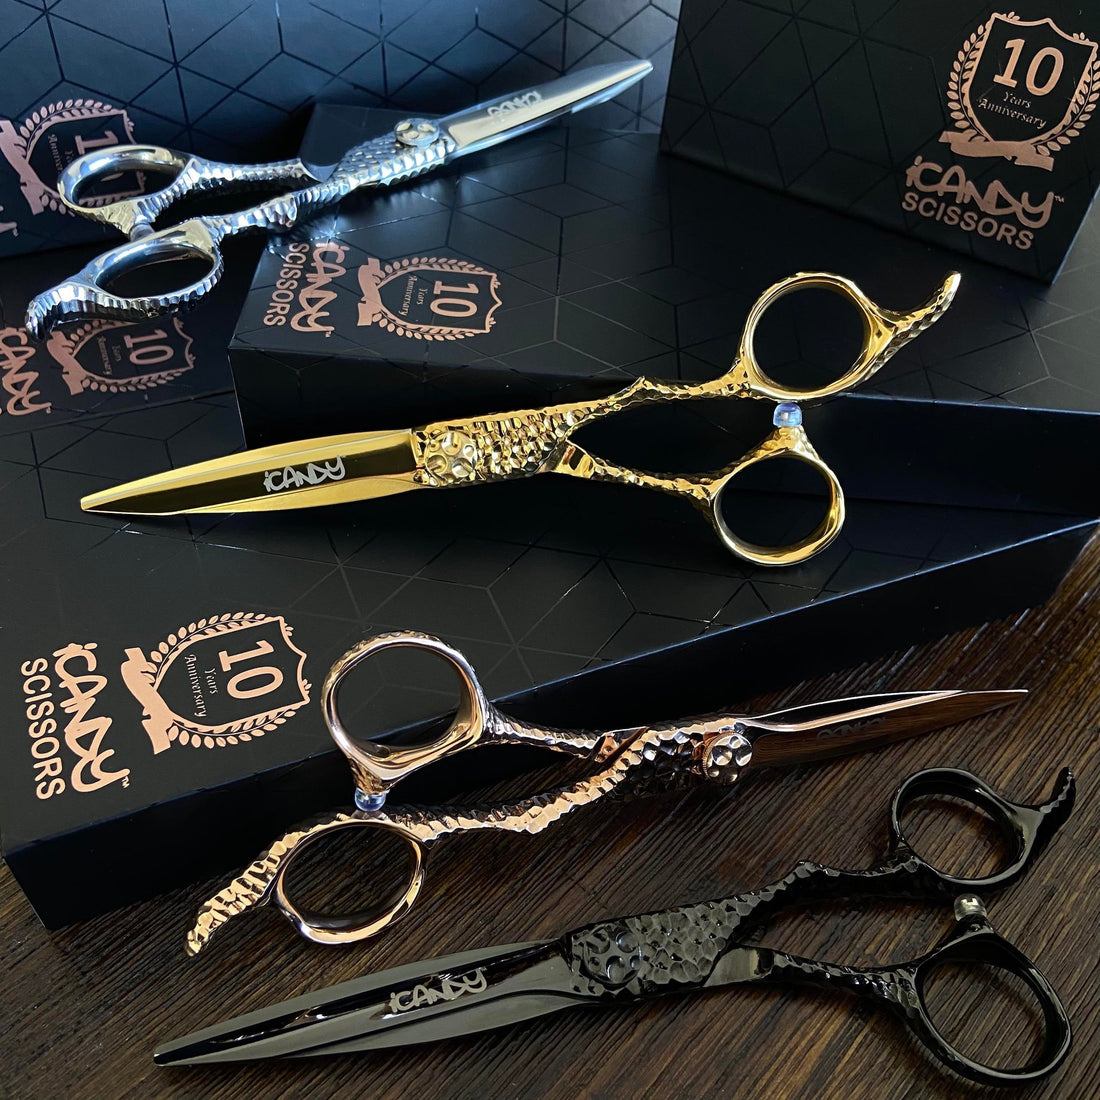 iCandy Scissors Celebrates 10 Years Of Innovation!